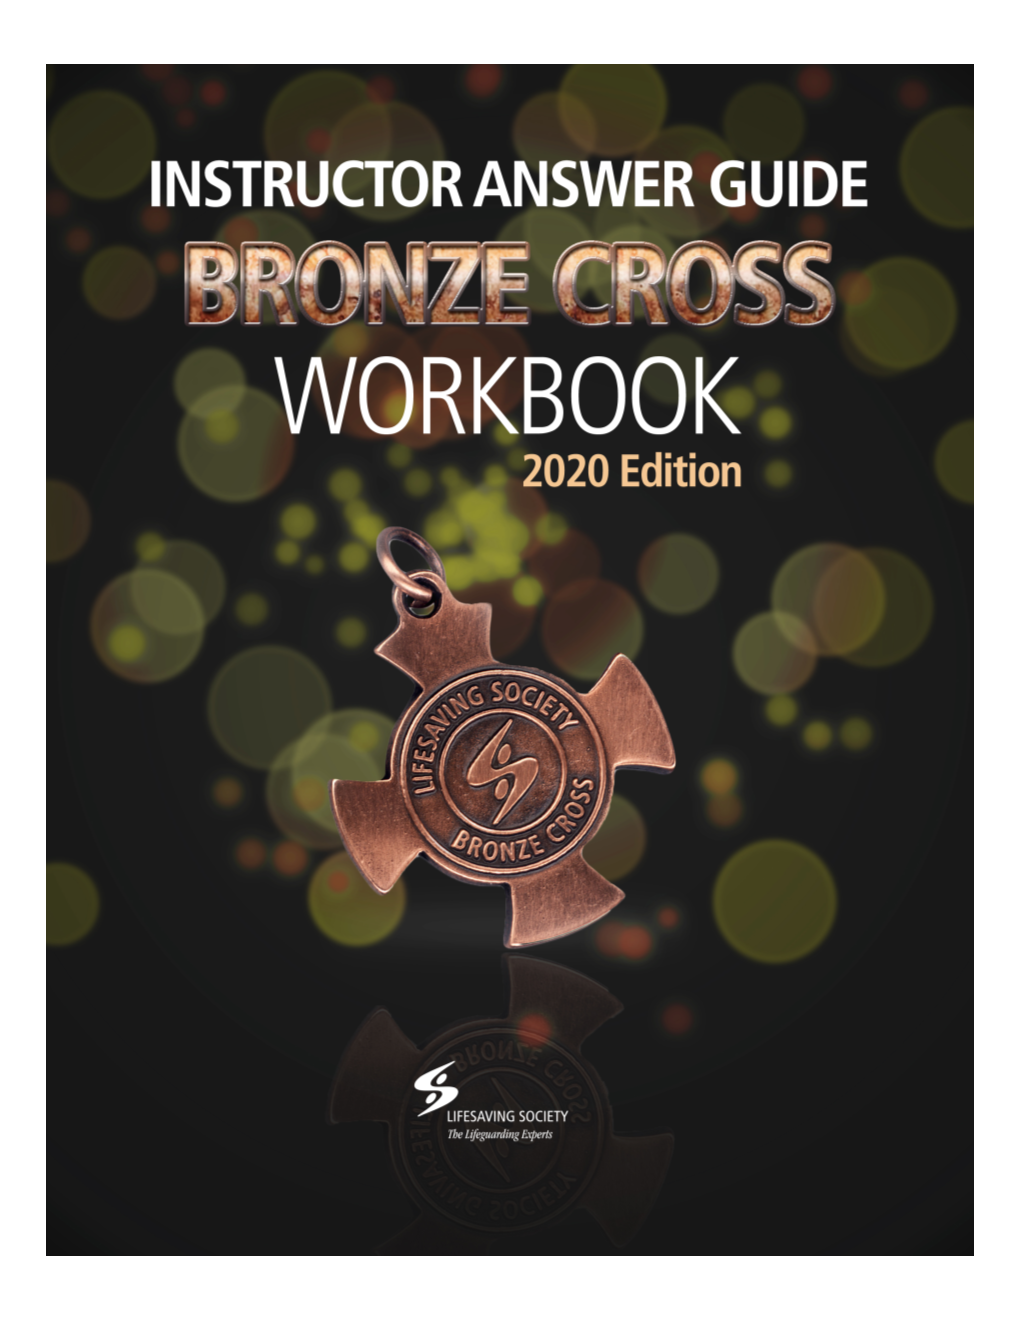 Bronze Cross Workbook Instructor Answer Guide